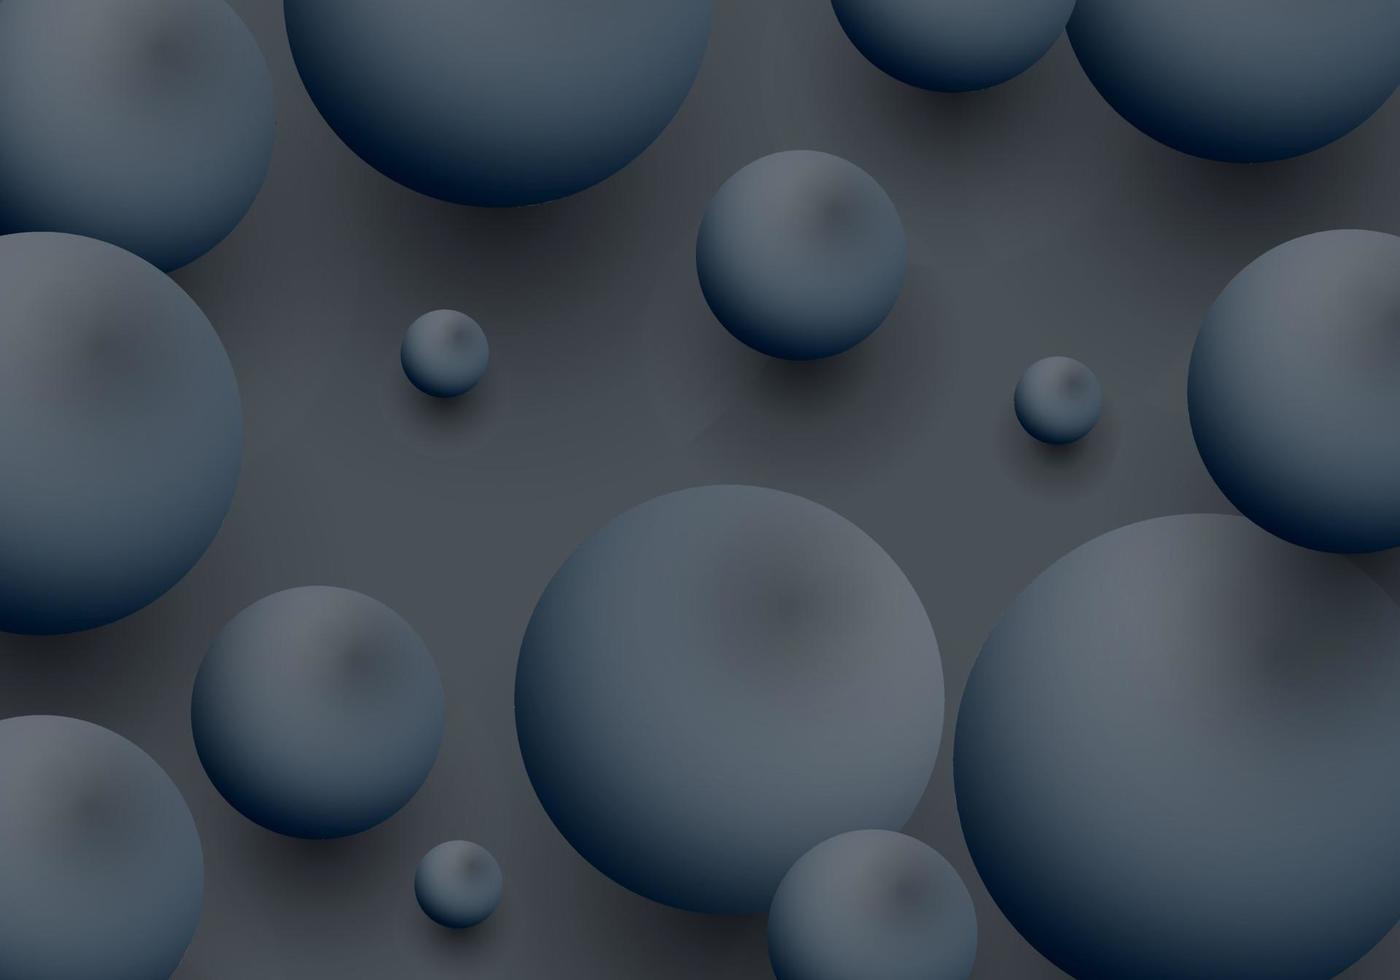 bolhas realistas de aglomerado de esfera 3d abstratas moldam fundo cinza escuro com espaço de cópia para texto vetor